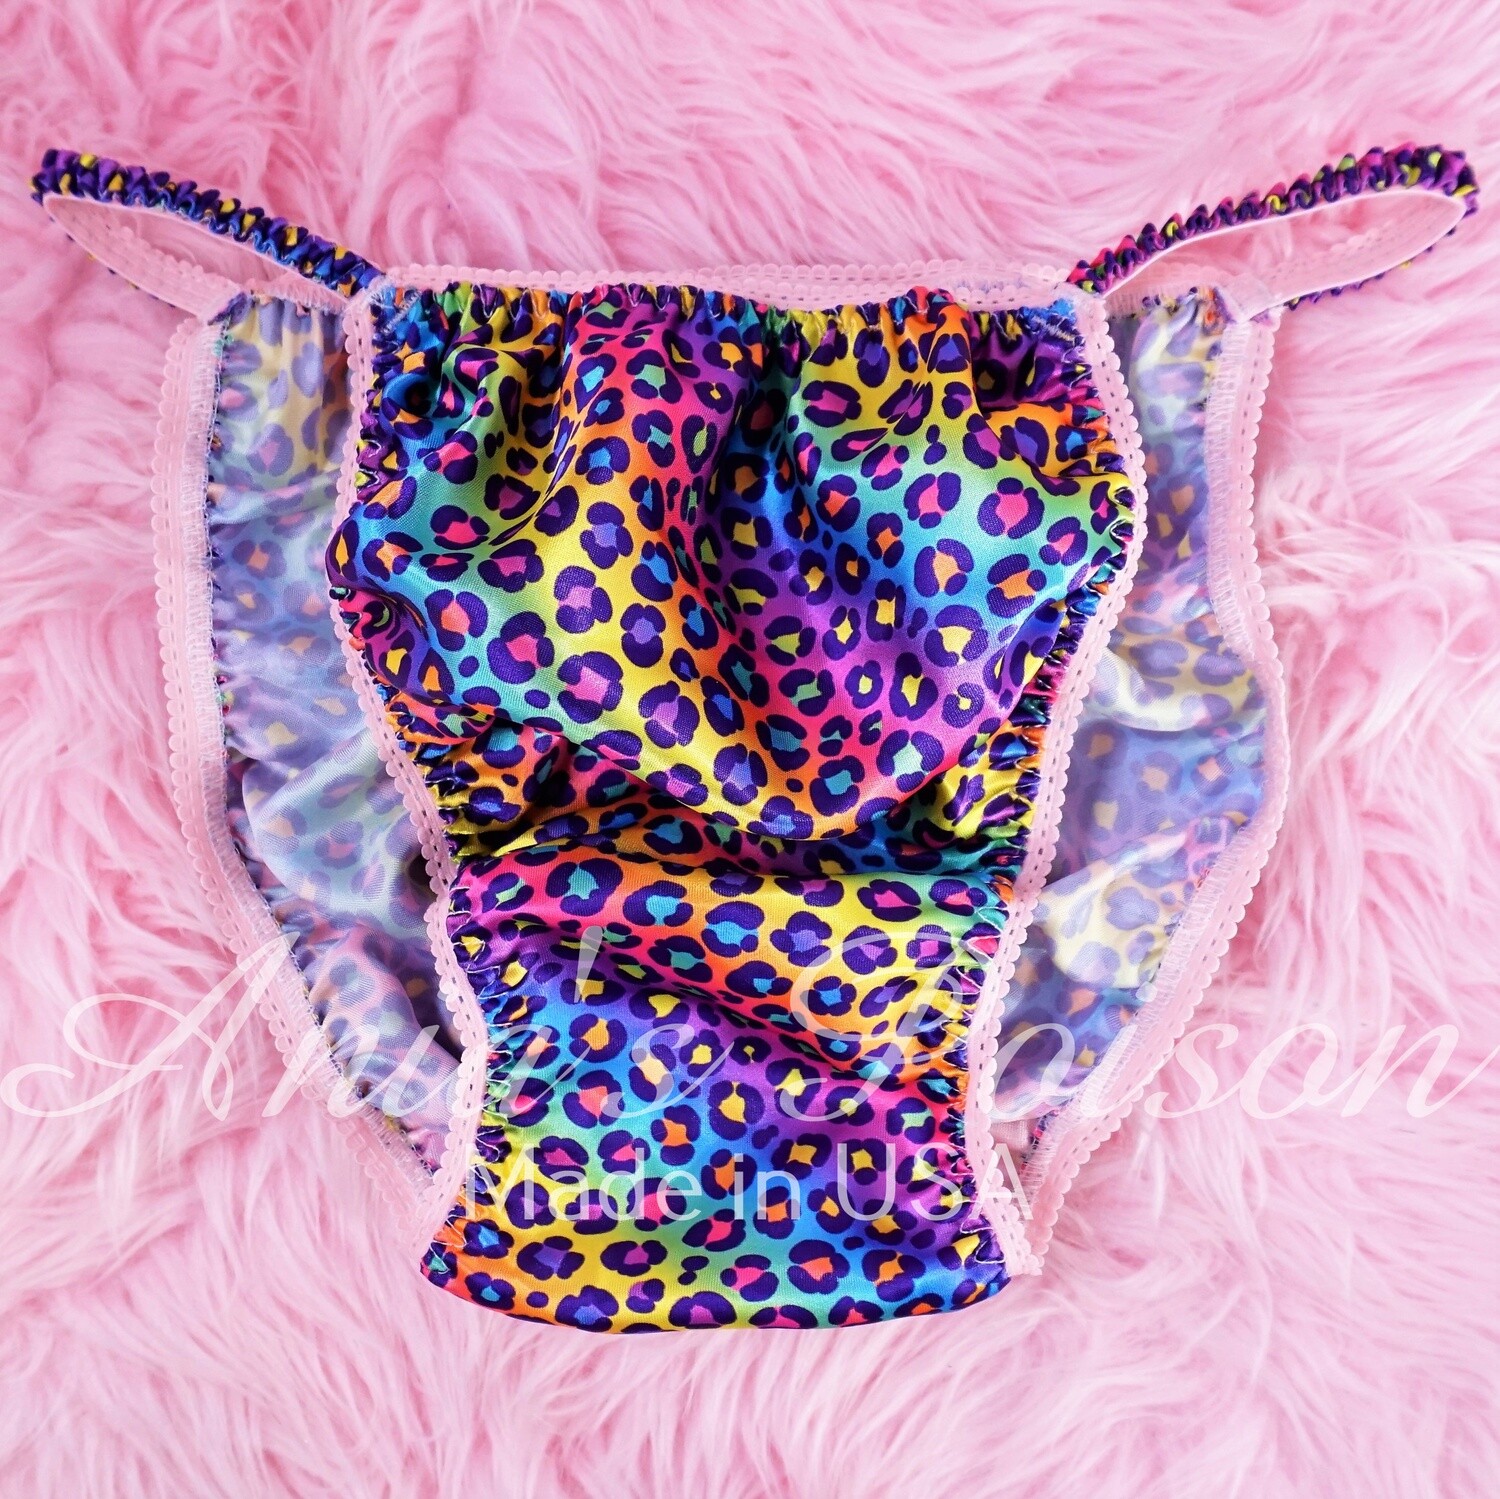 Ania's Poison MANties S - XL Rainbow Leopard Print Rare 100% polyester string bikini sissy mens underwear panties